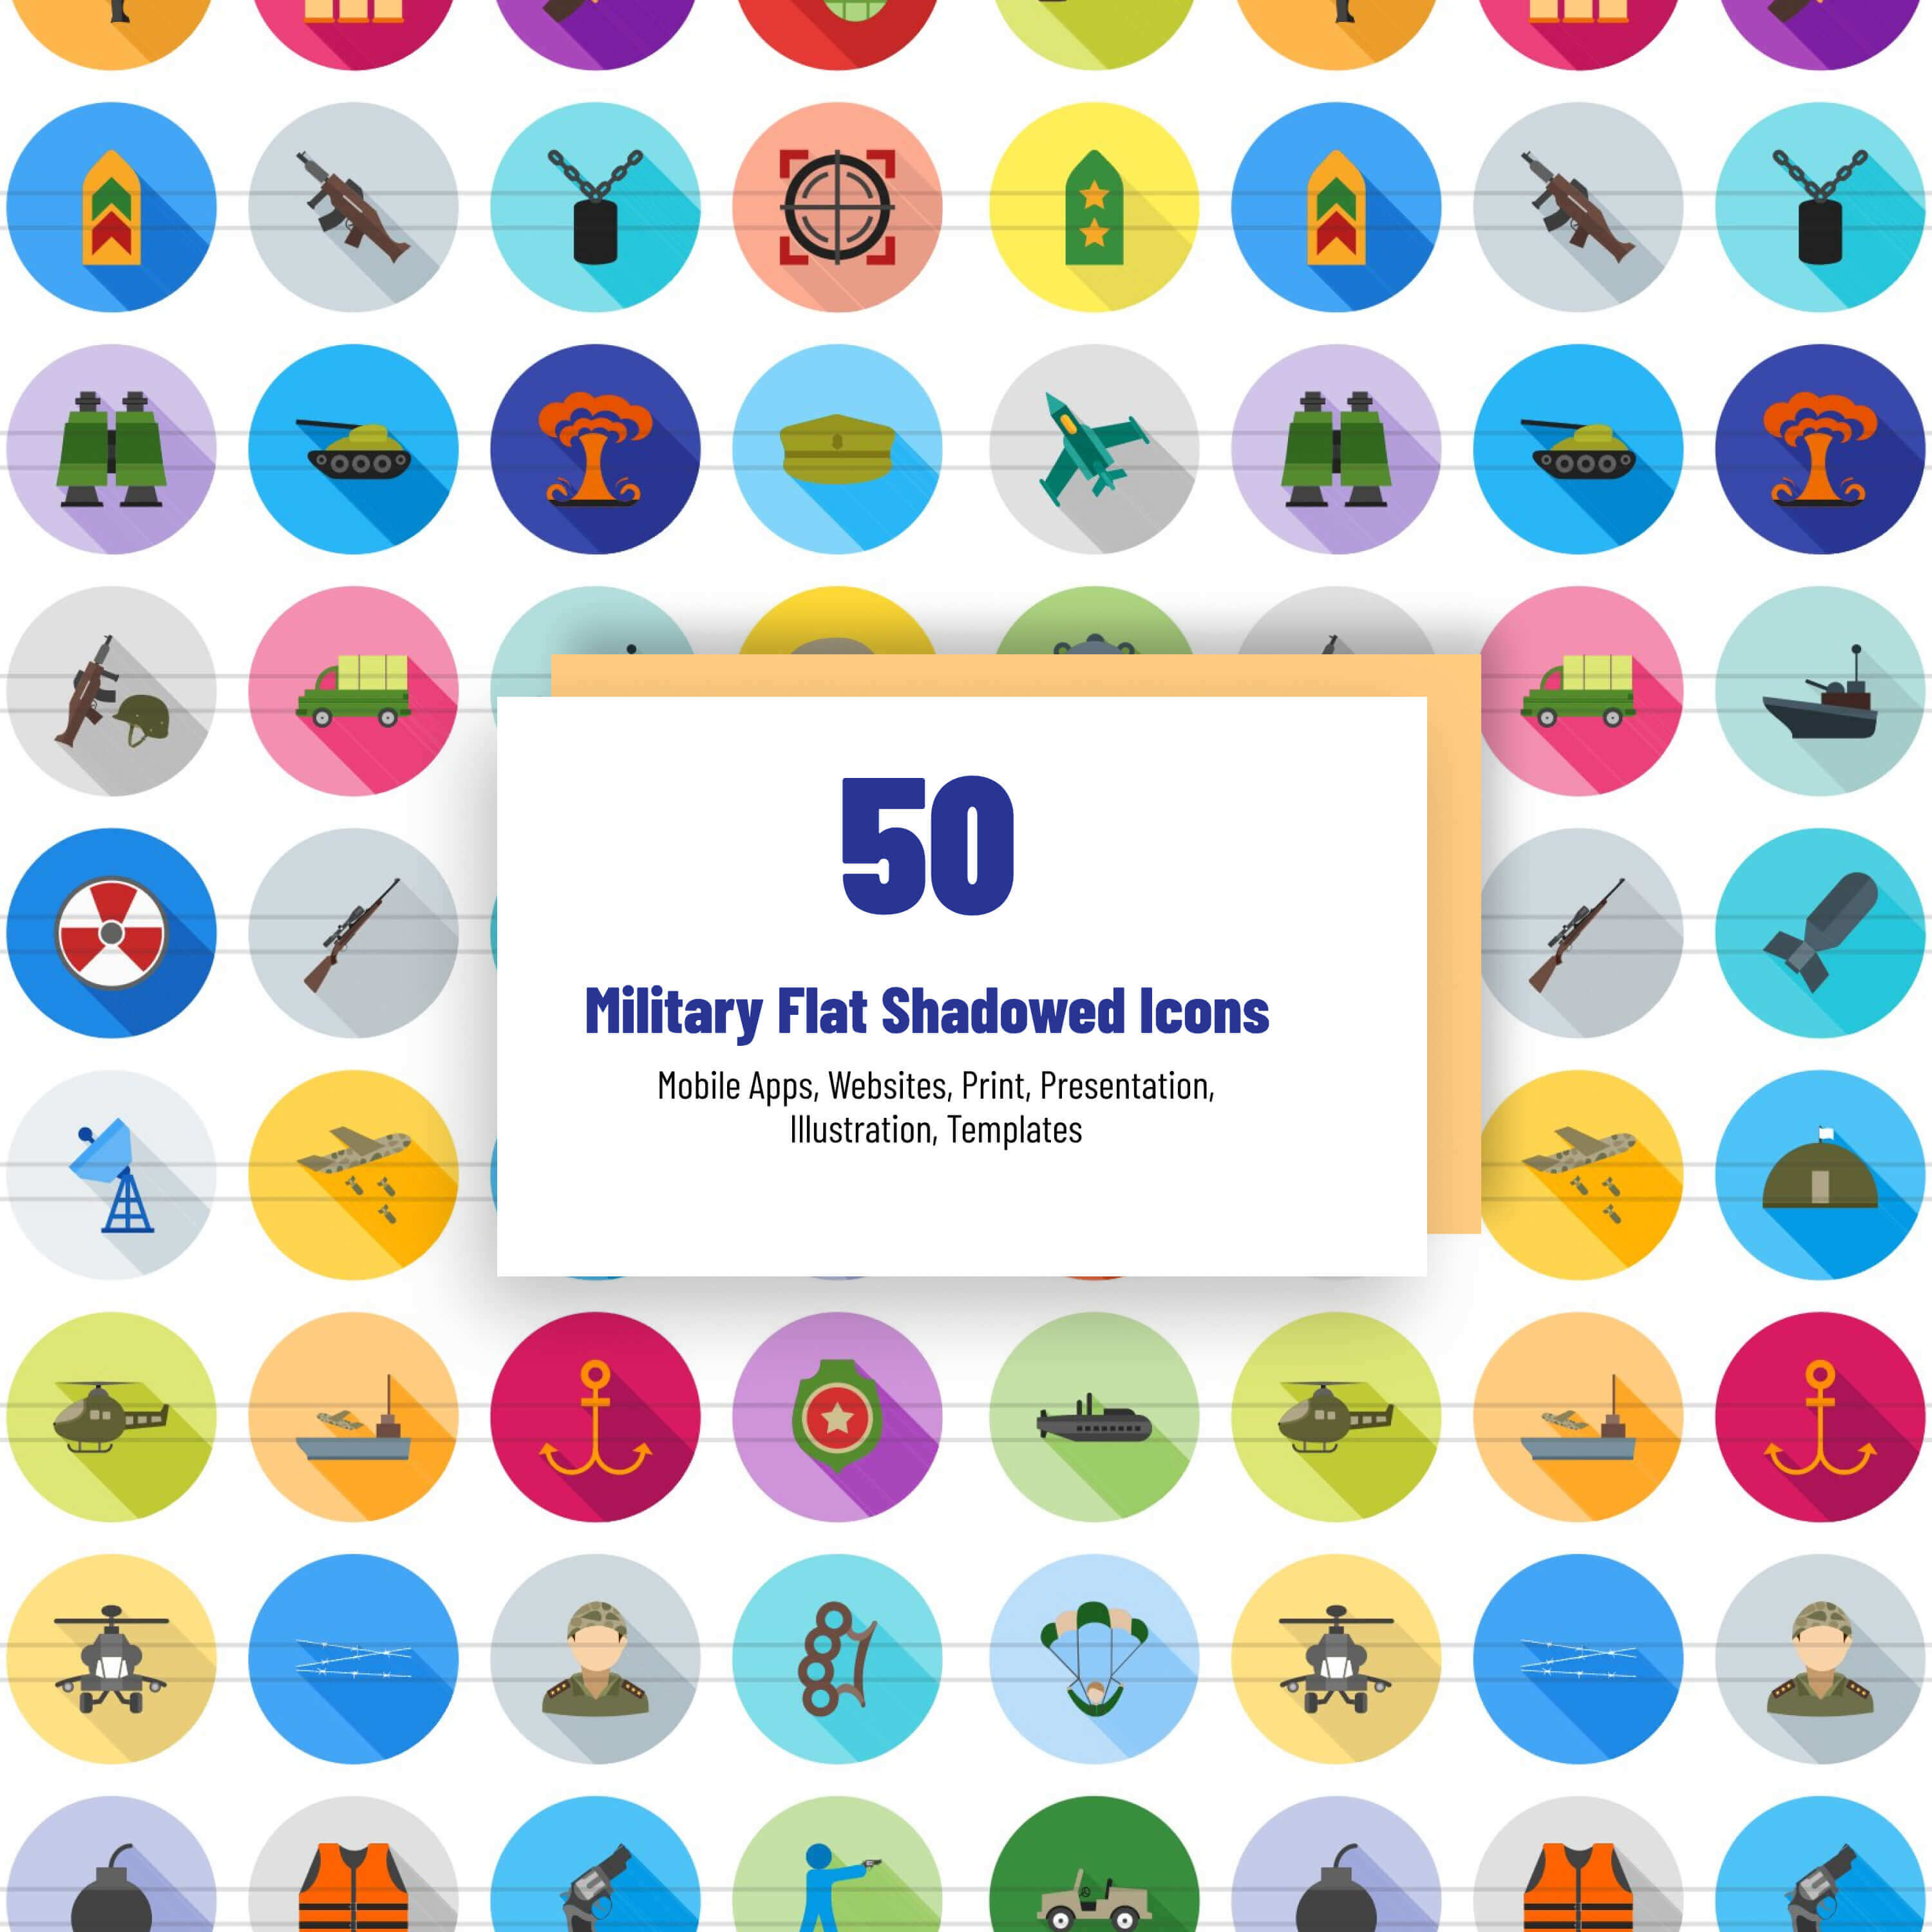 50 Military Flat Shadowed Icons.